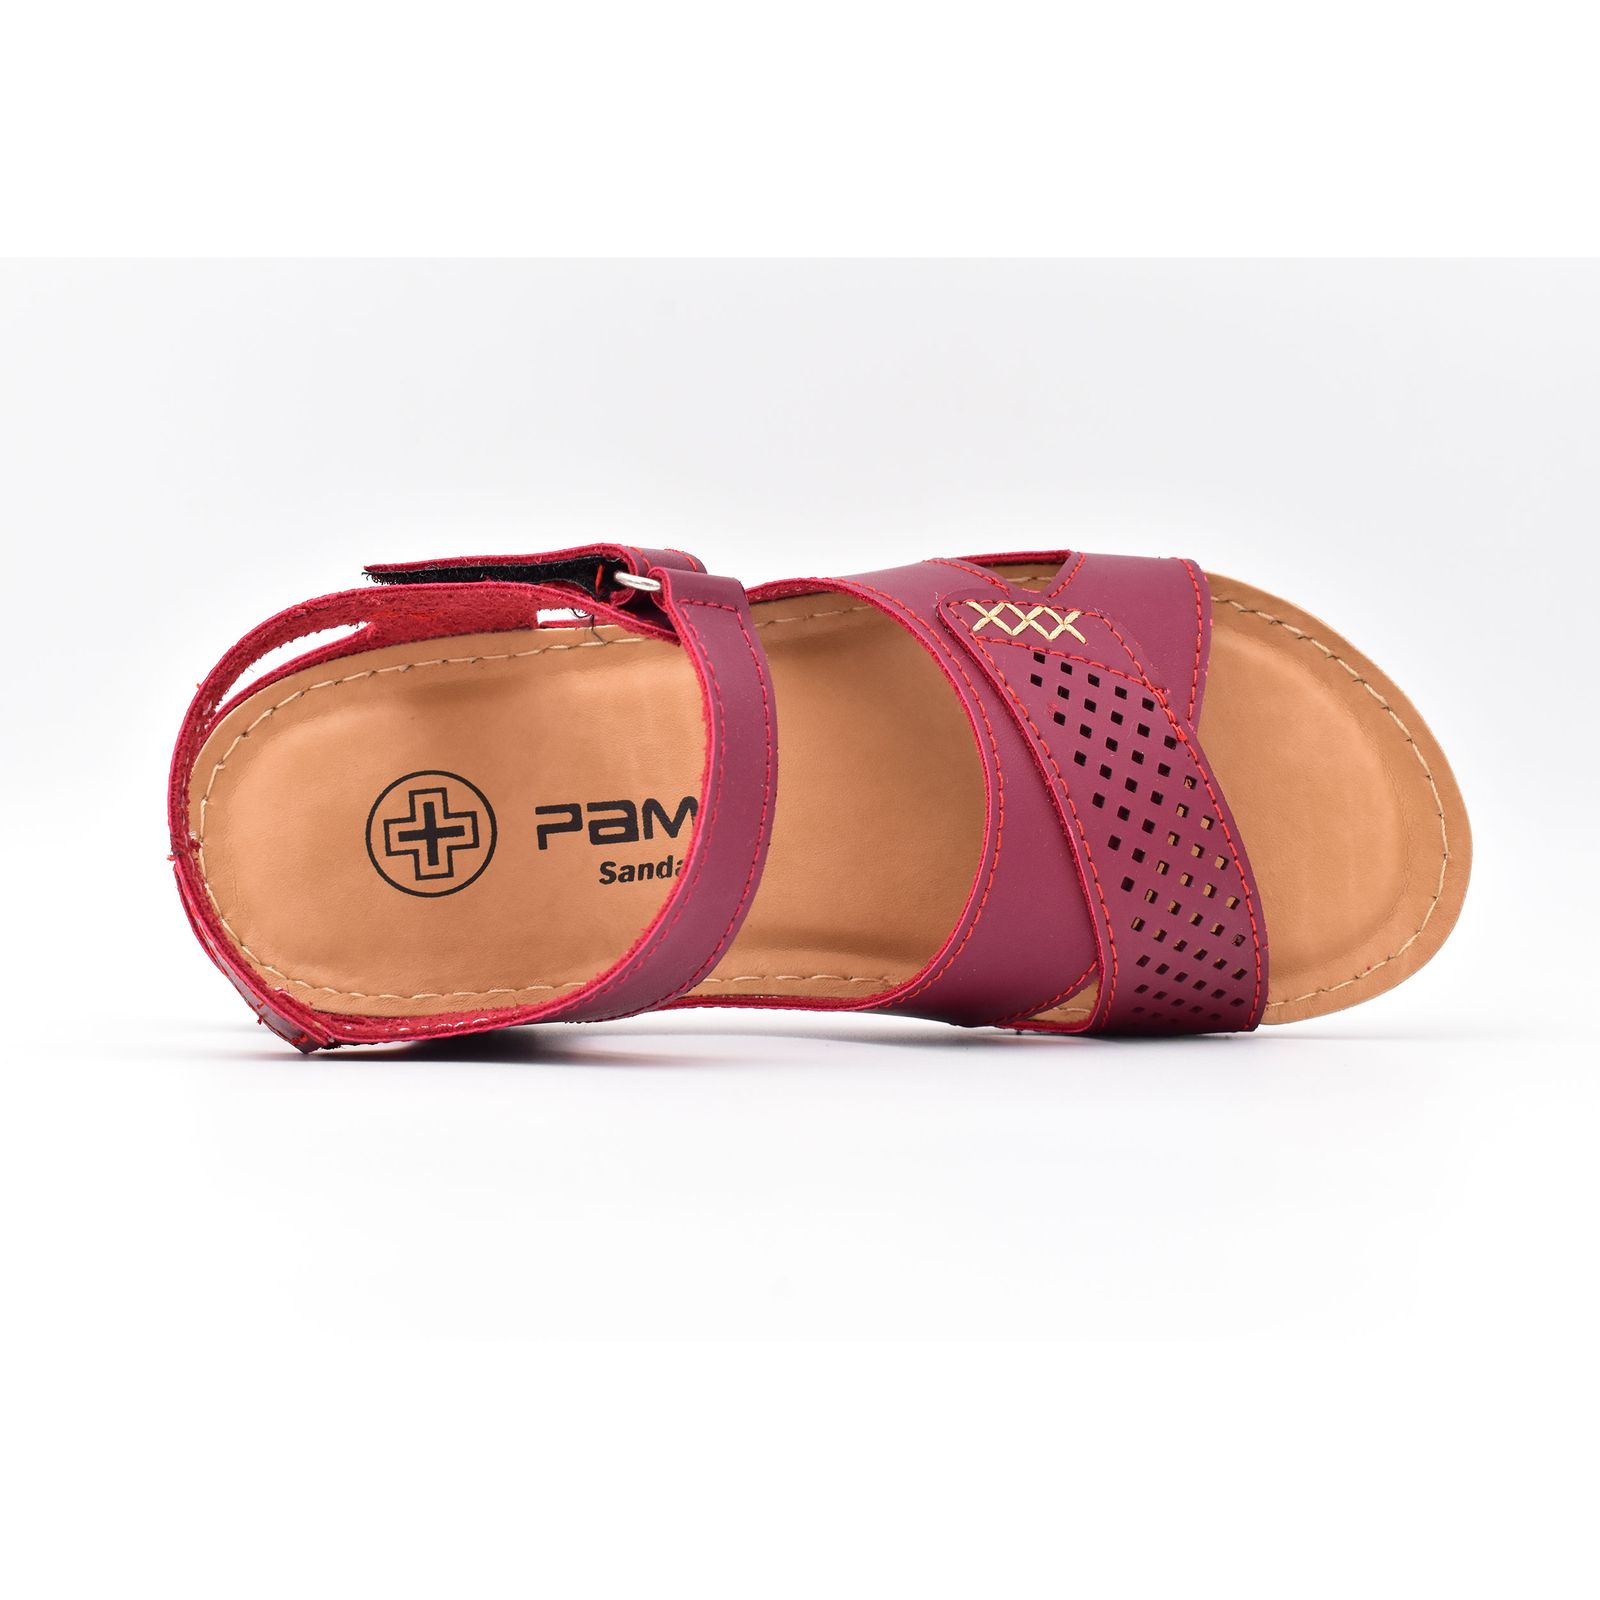 صندل زنانه پاما مدل PRY کد G1571 -  - 6